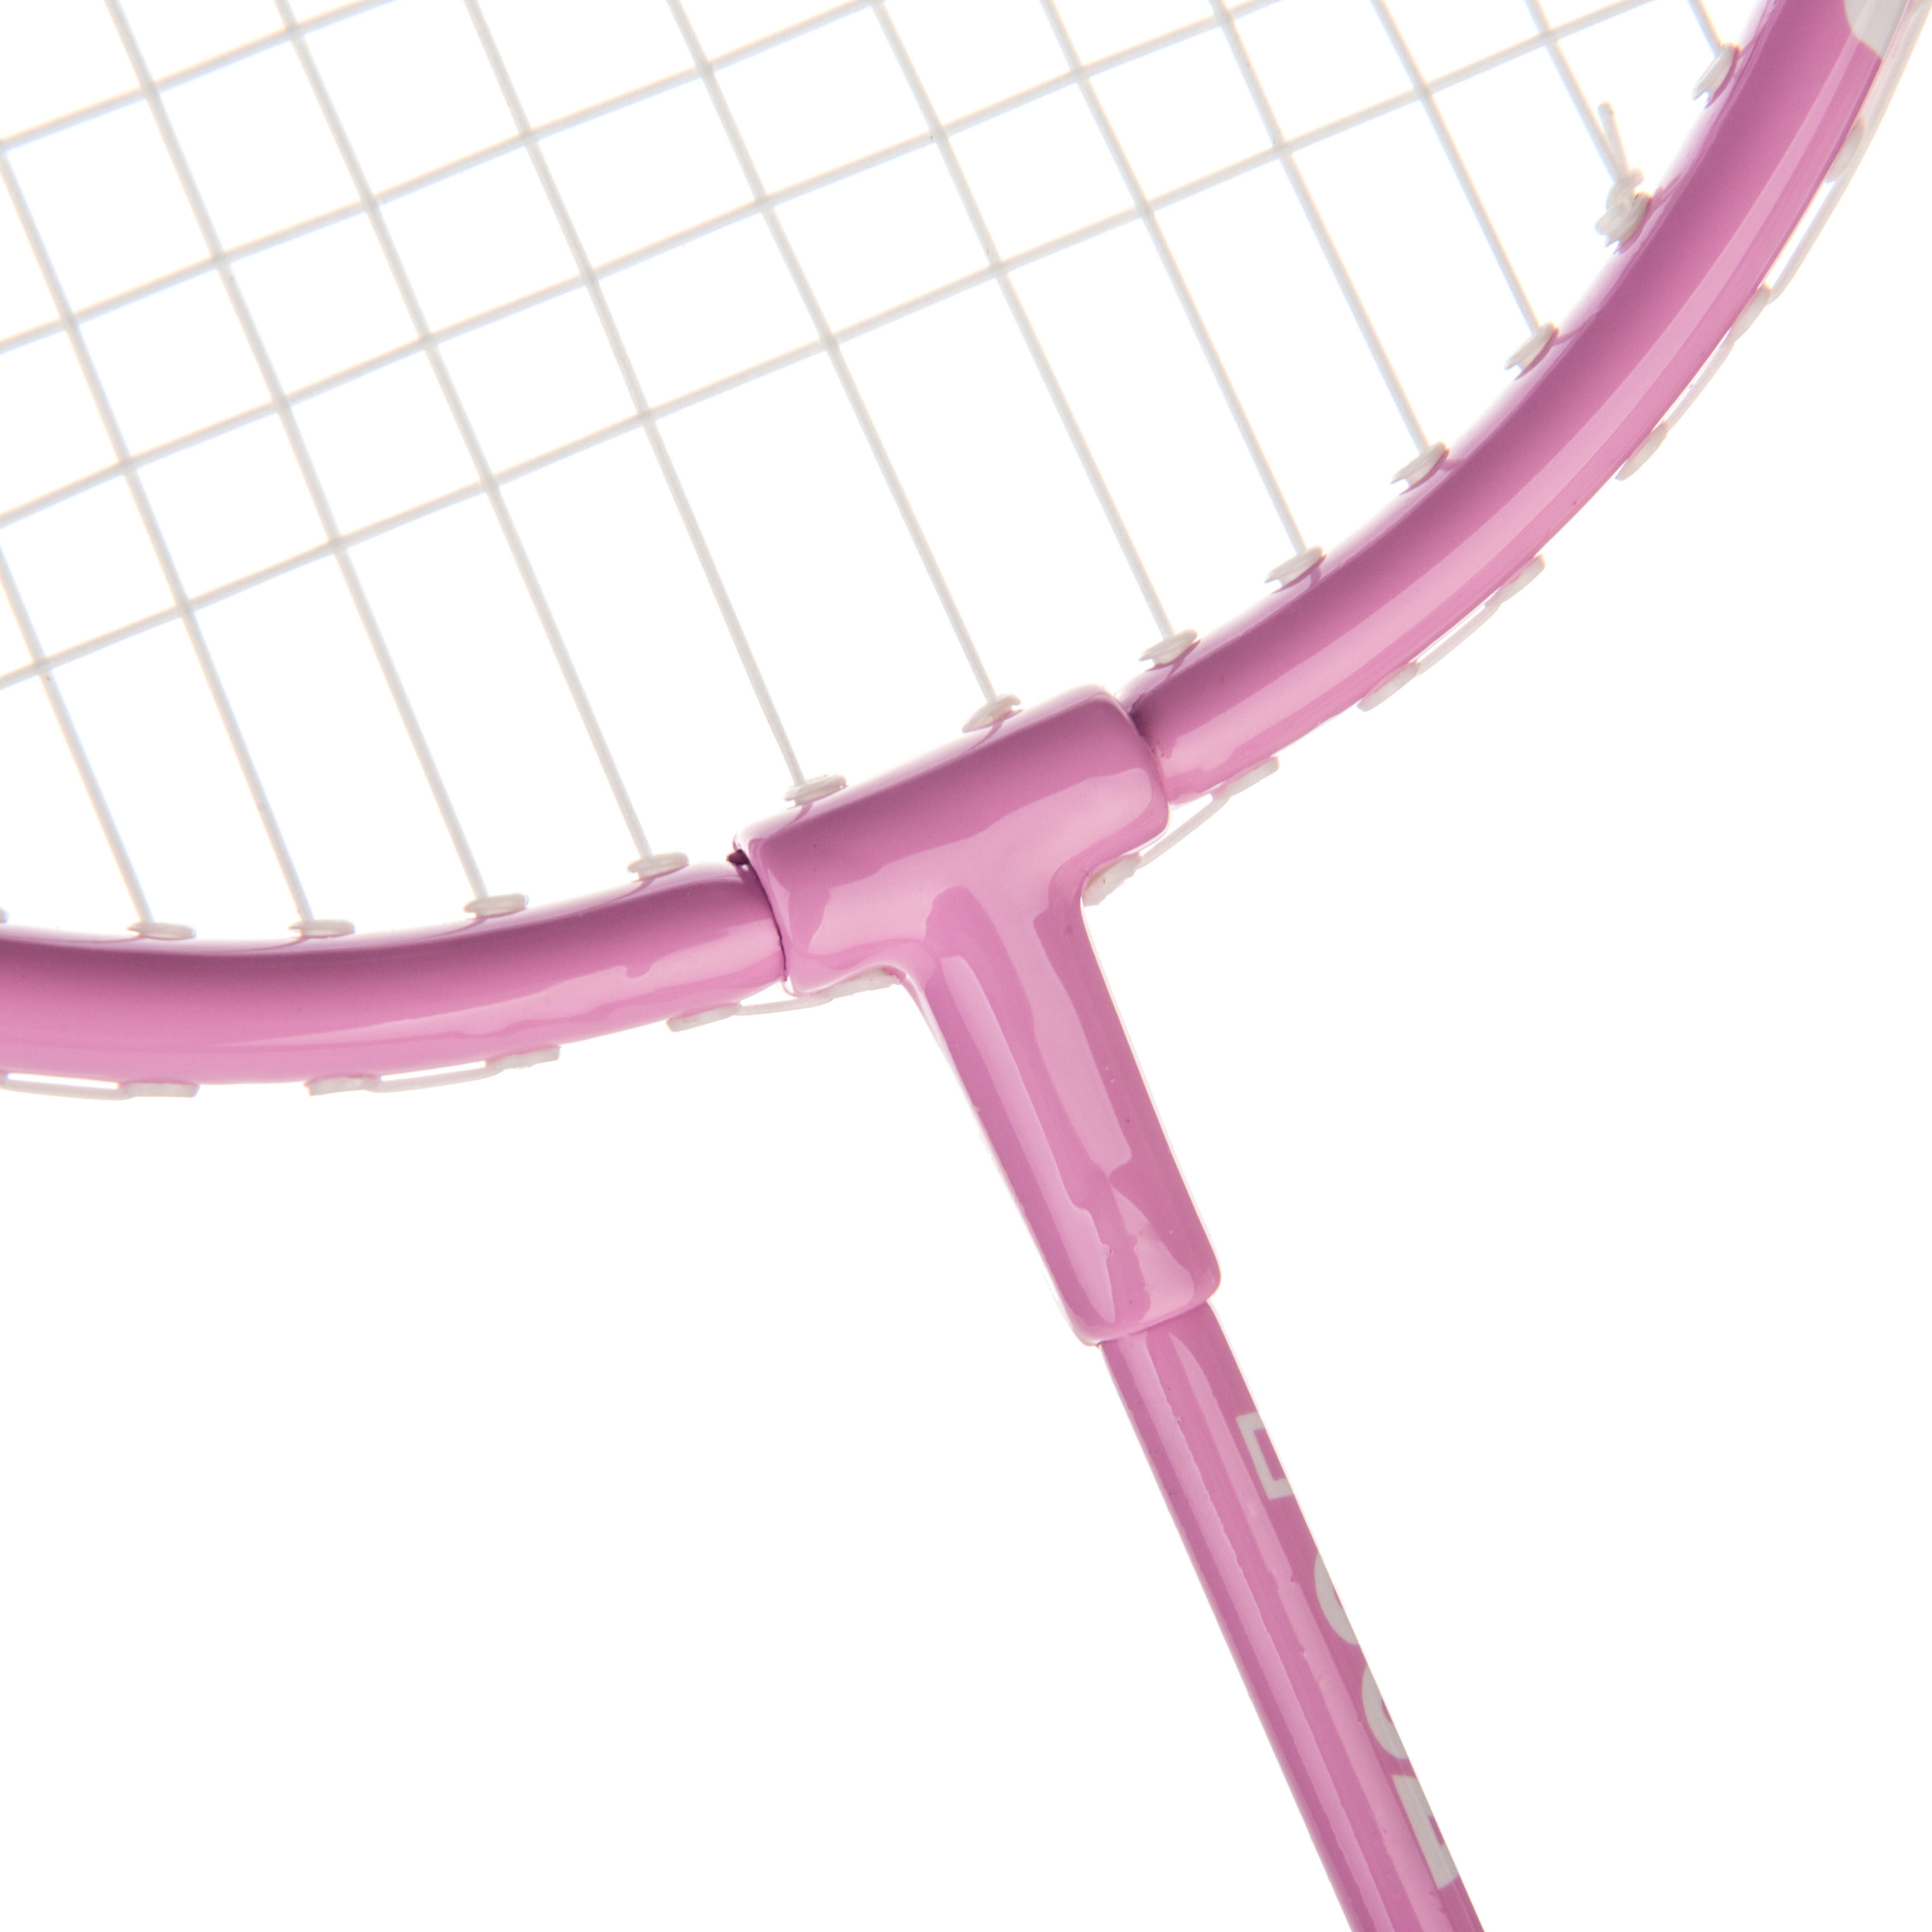 pink badminton racket